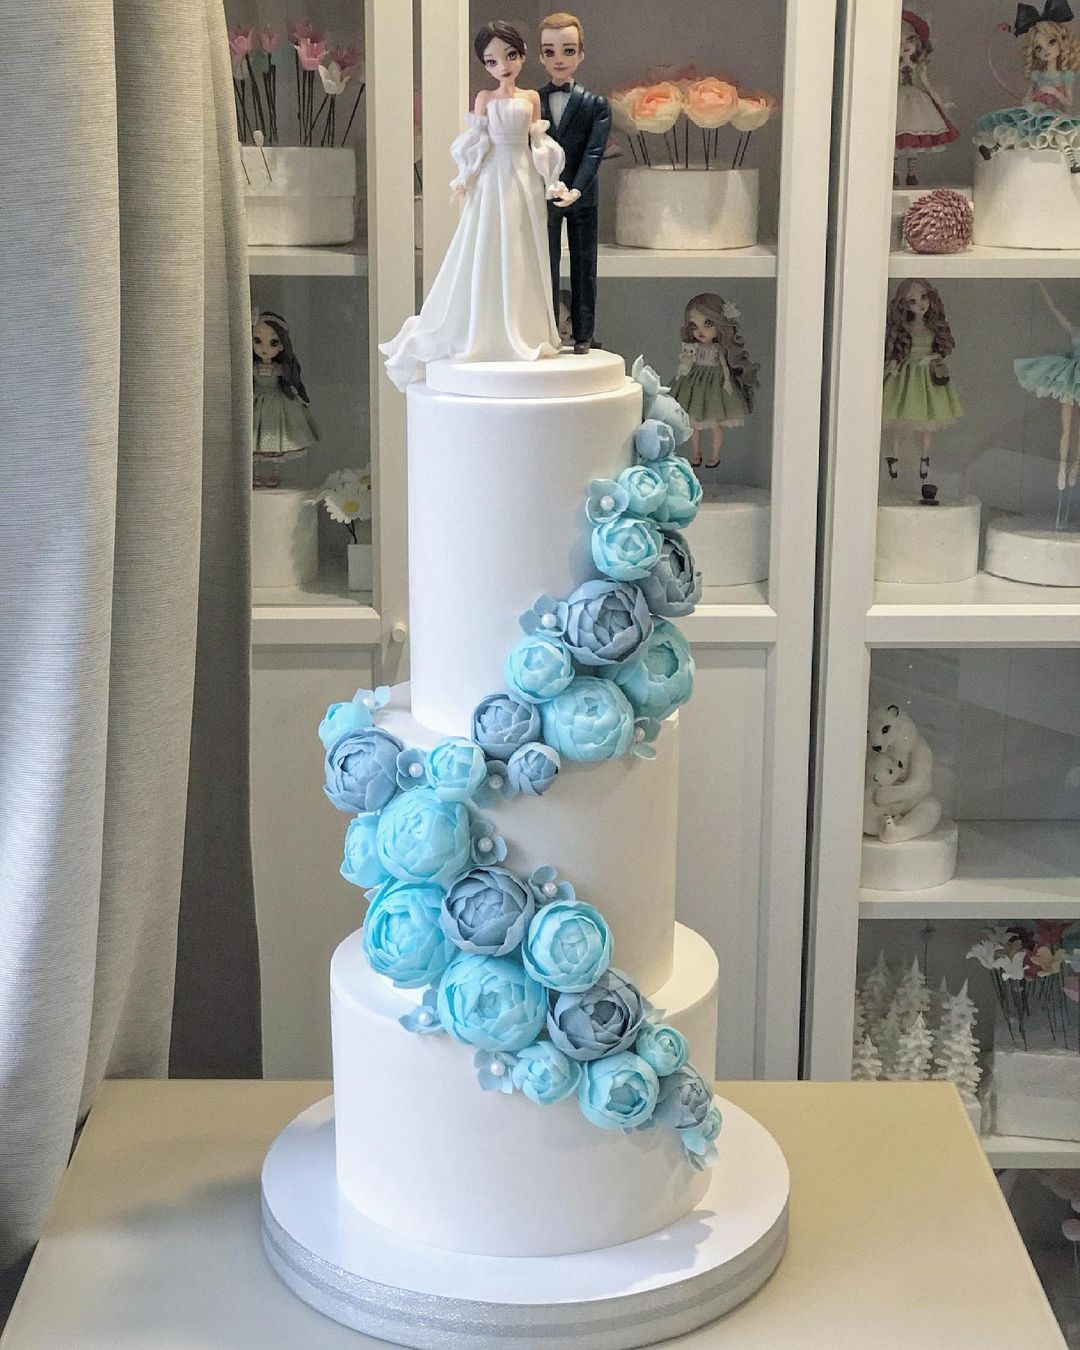 3 tier wedding cake with blue sugar flowers and couple wedding topper via kabilova_cake_205261093_53